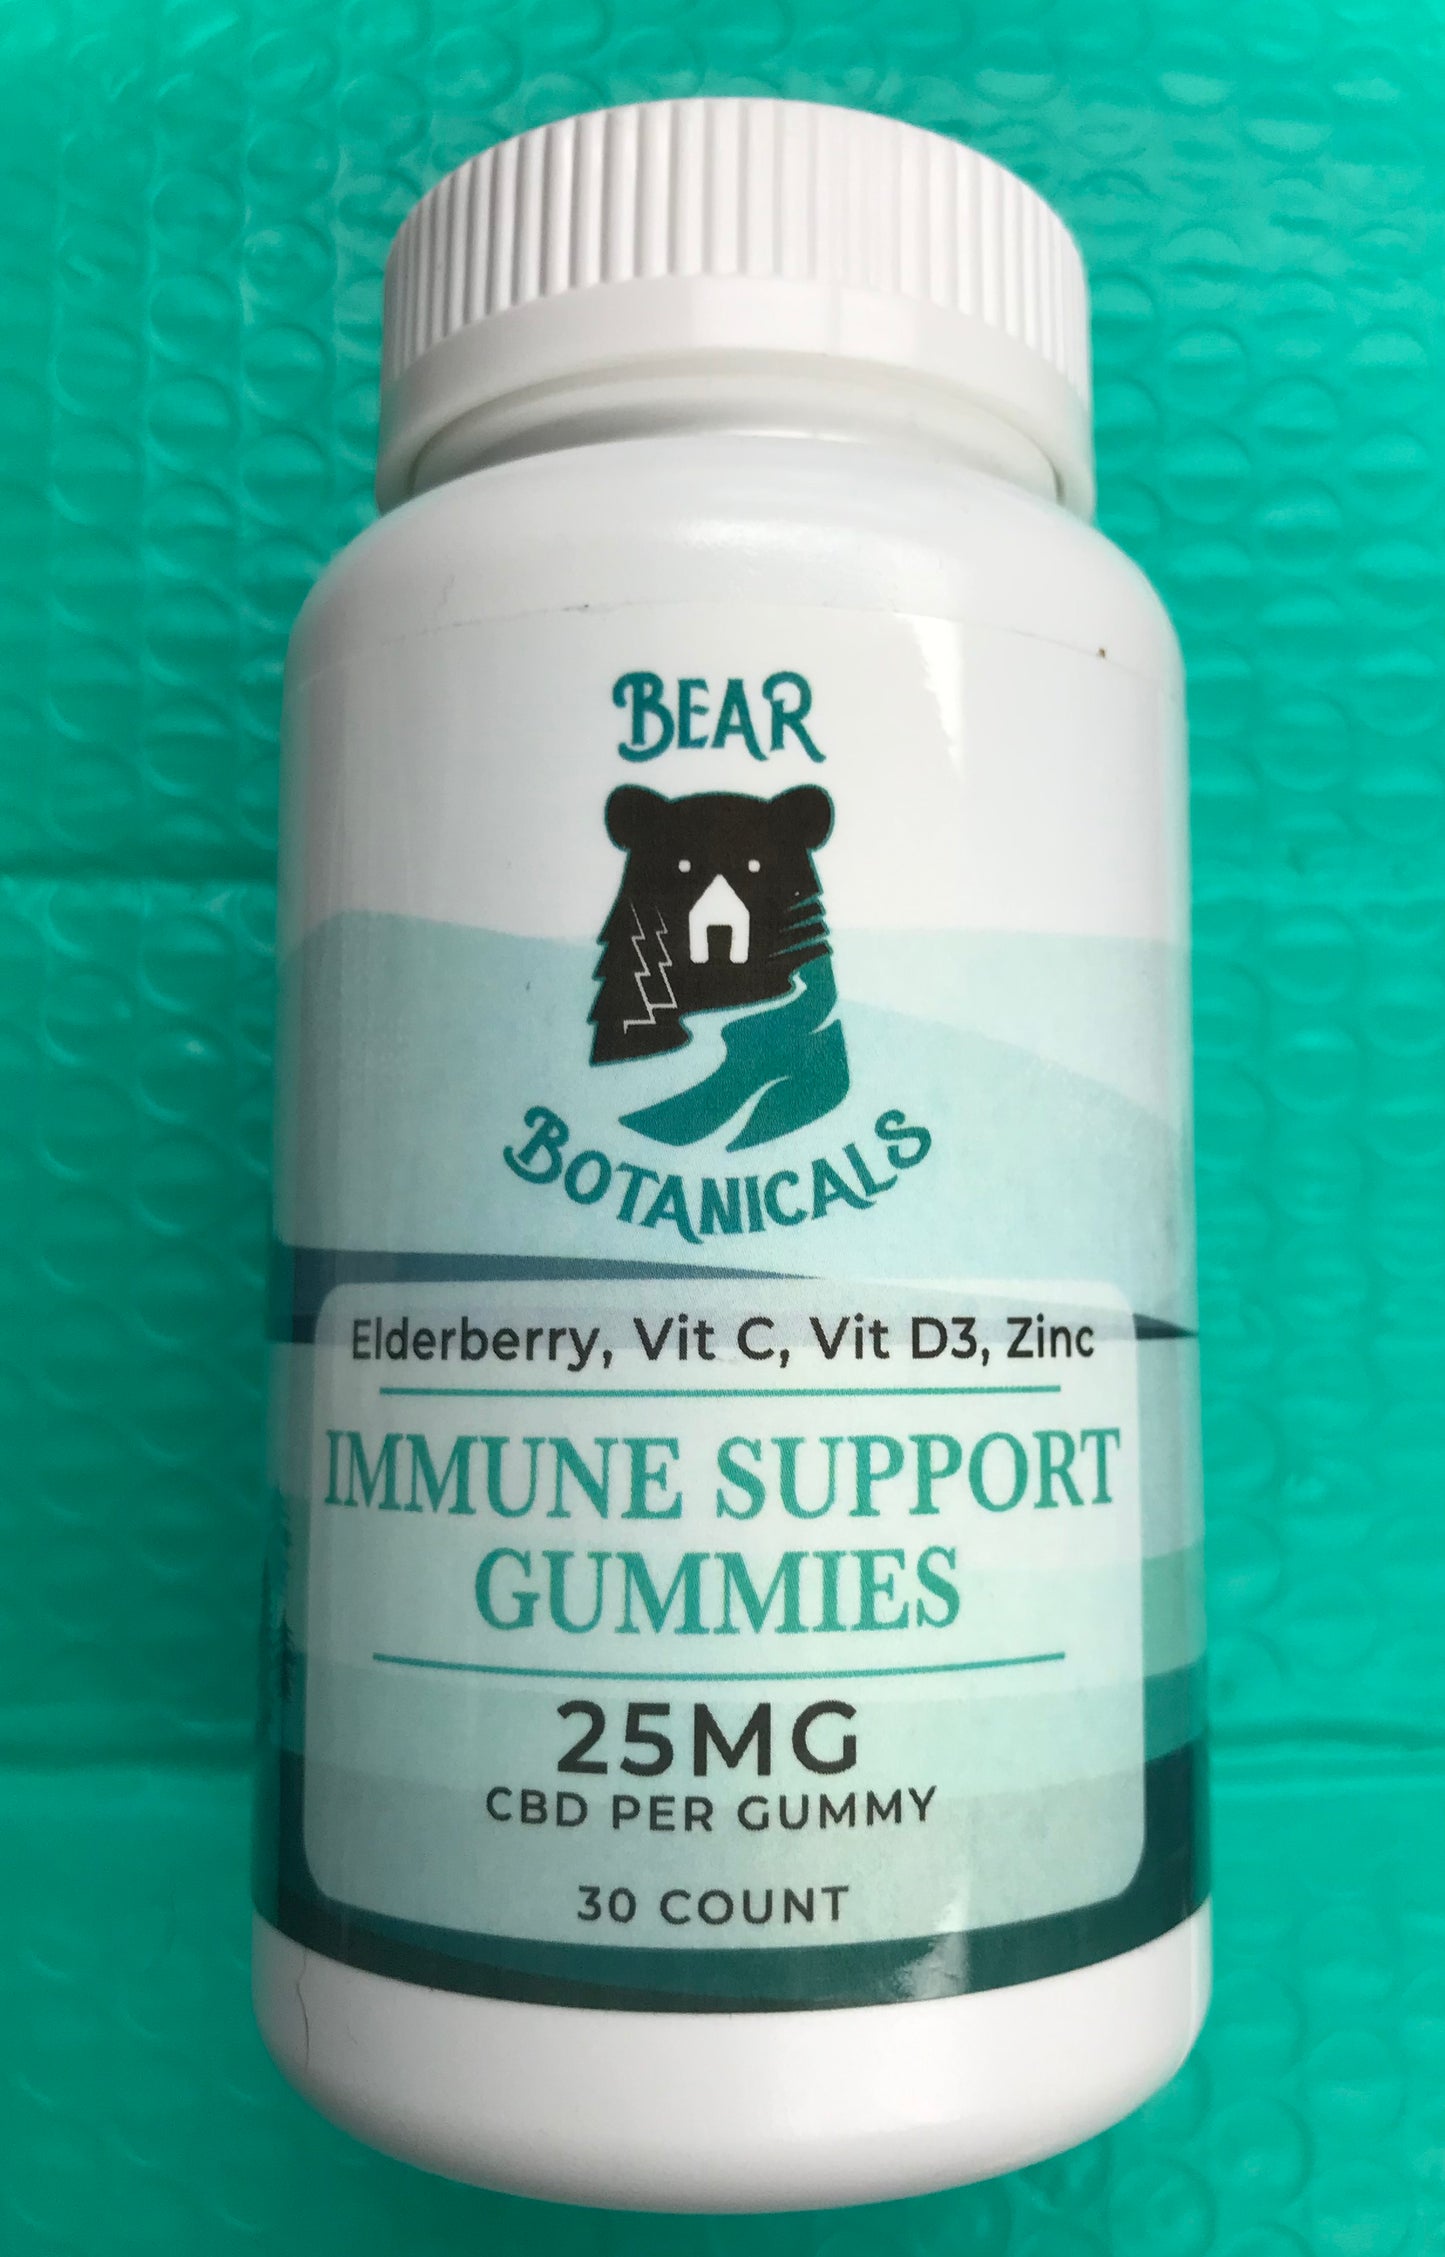 Immune Support CBD Gummies - 25mg